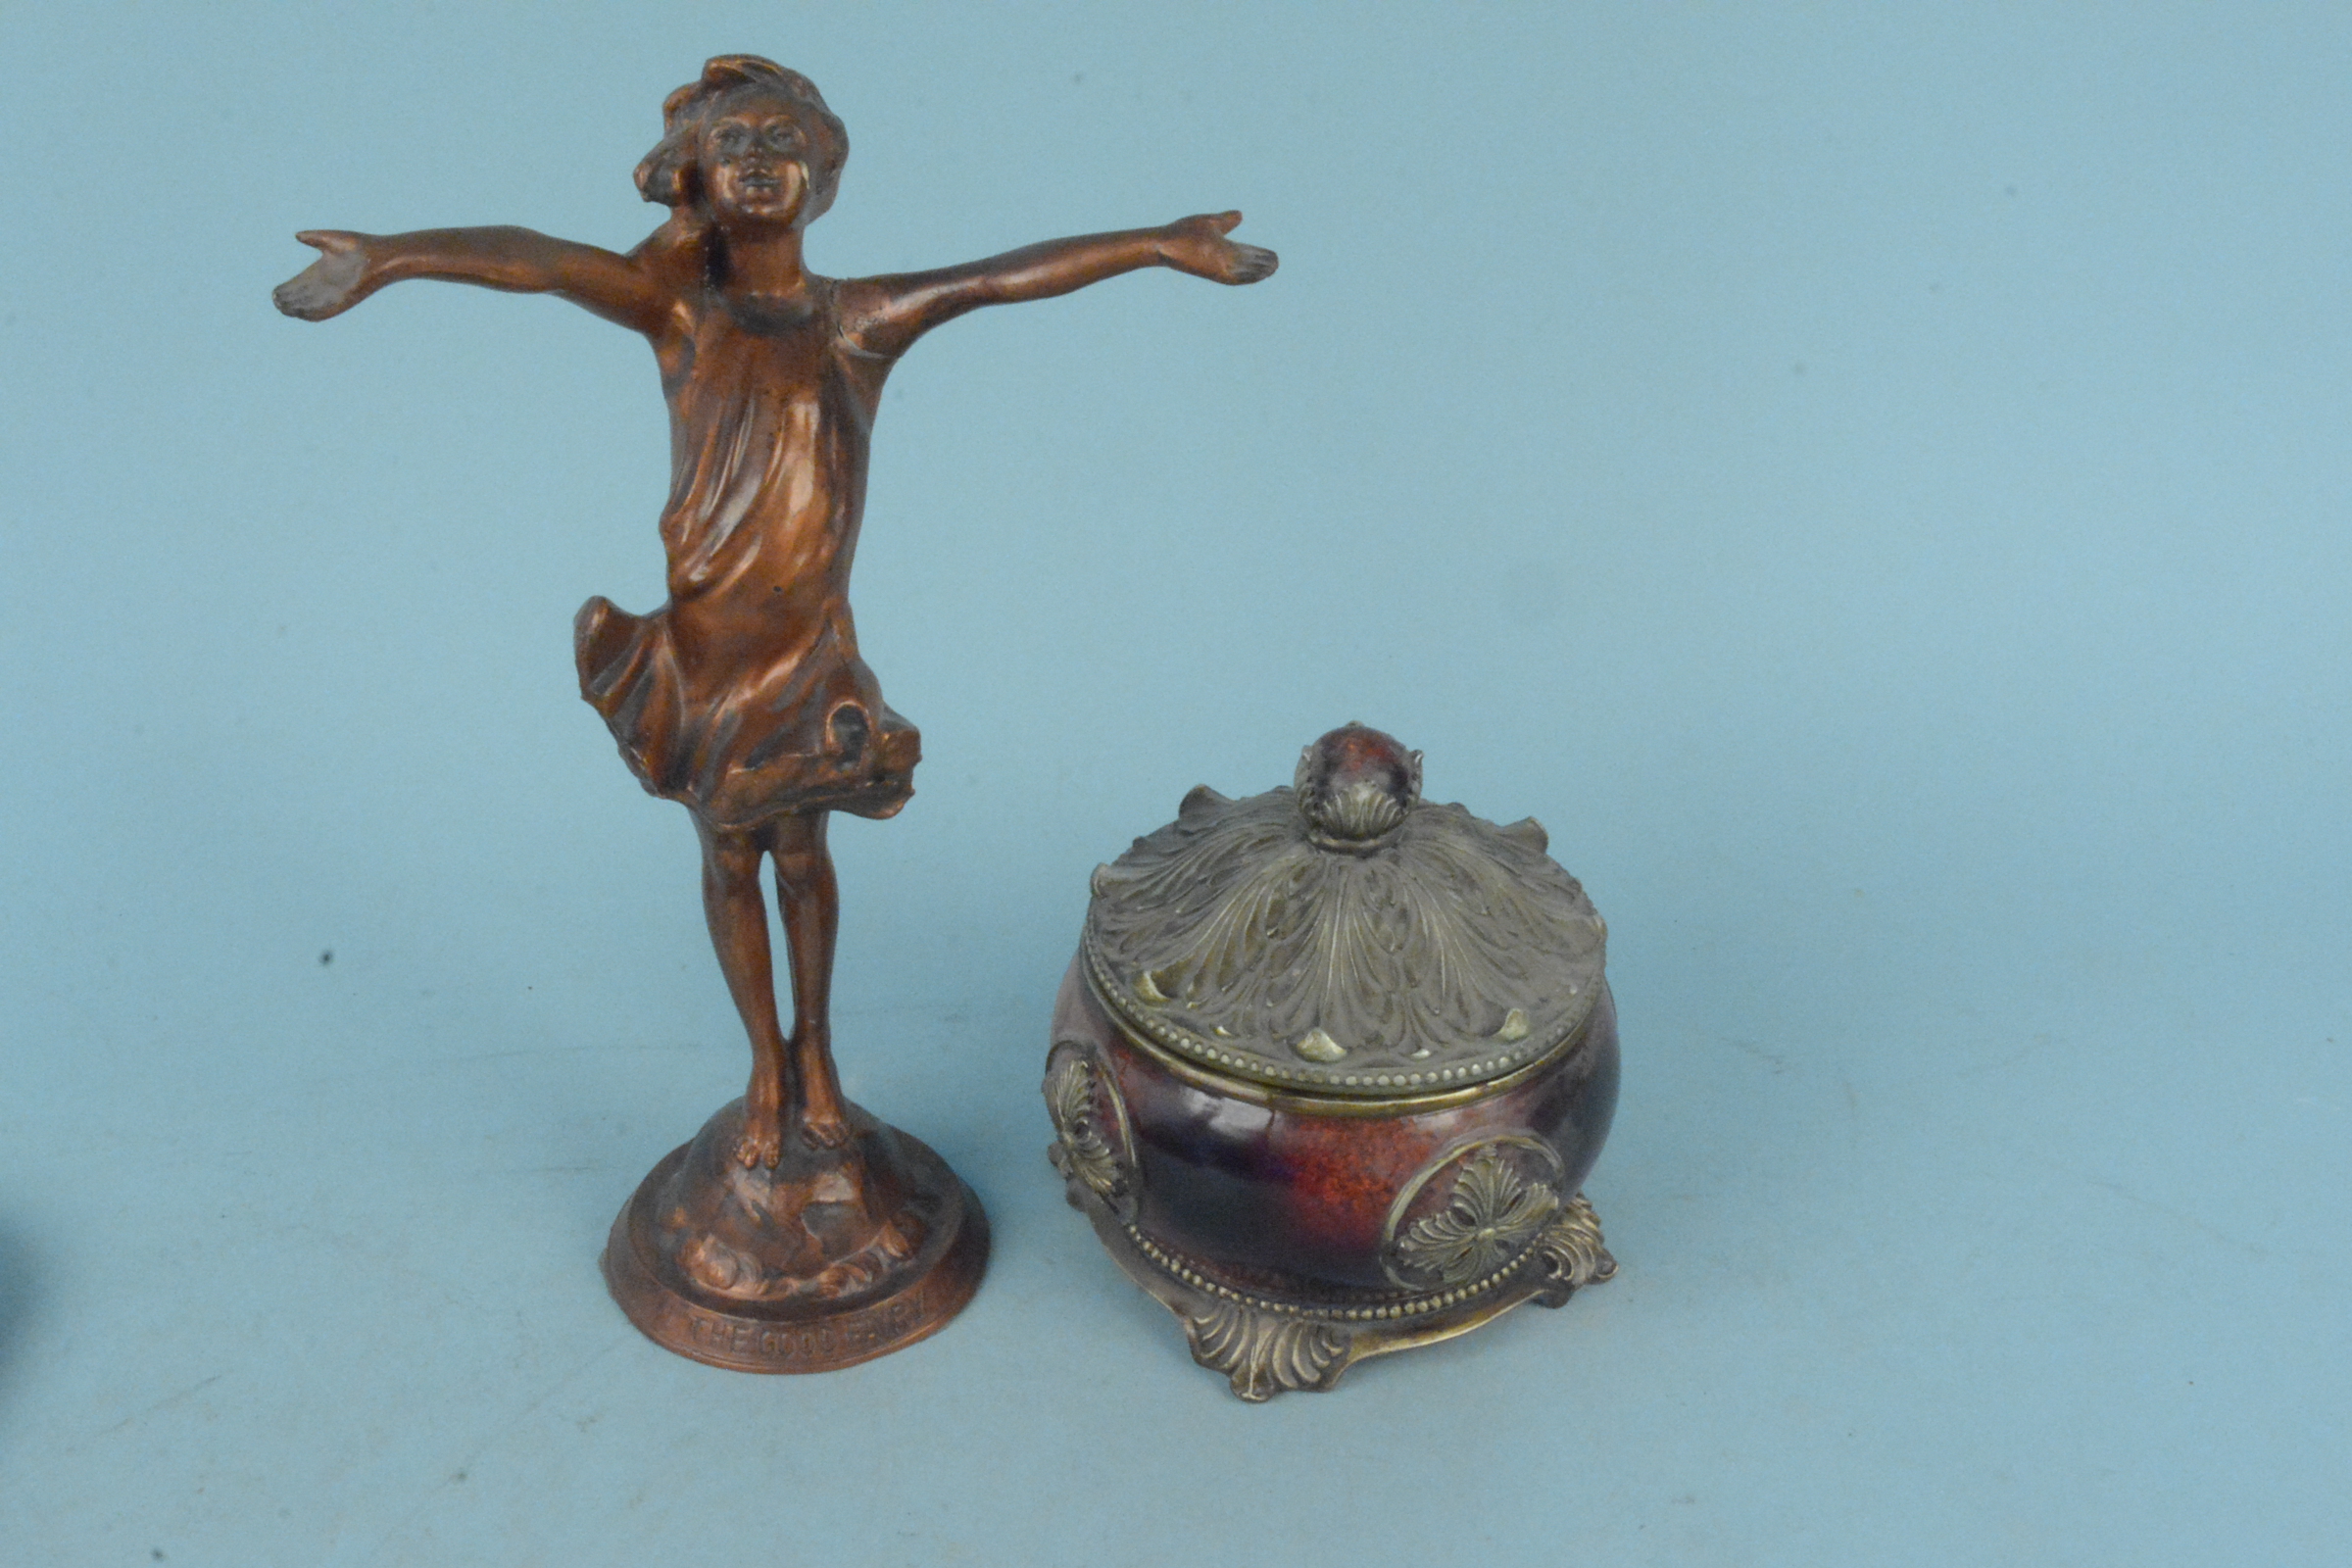 A spelter figurine 'The Good Fairy', impressed JMR 1916 (Jessie McCutcheon Raleigh), - Image 3 of 3